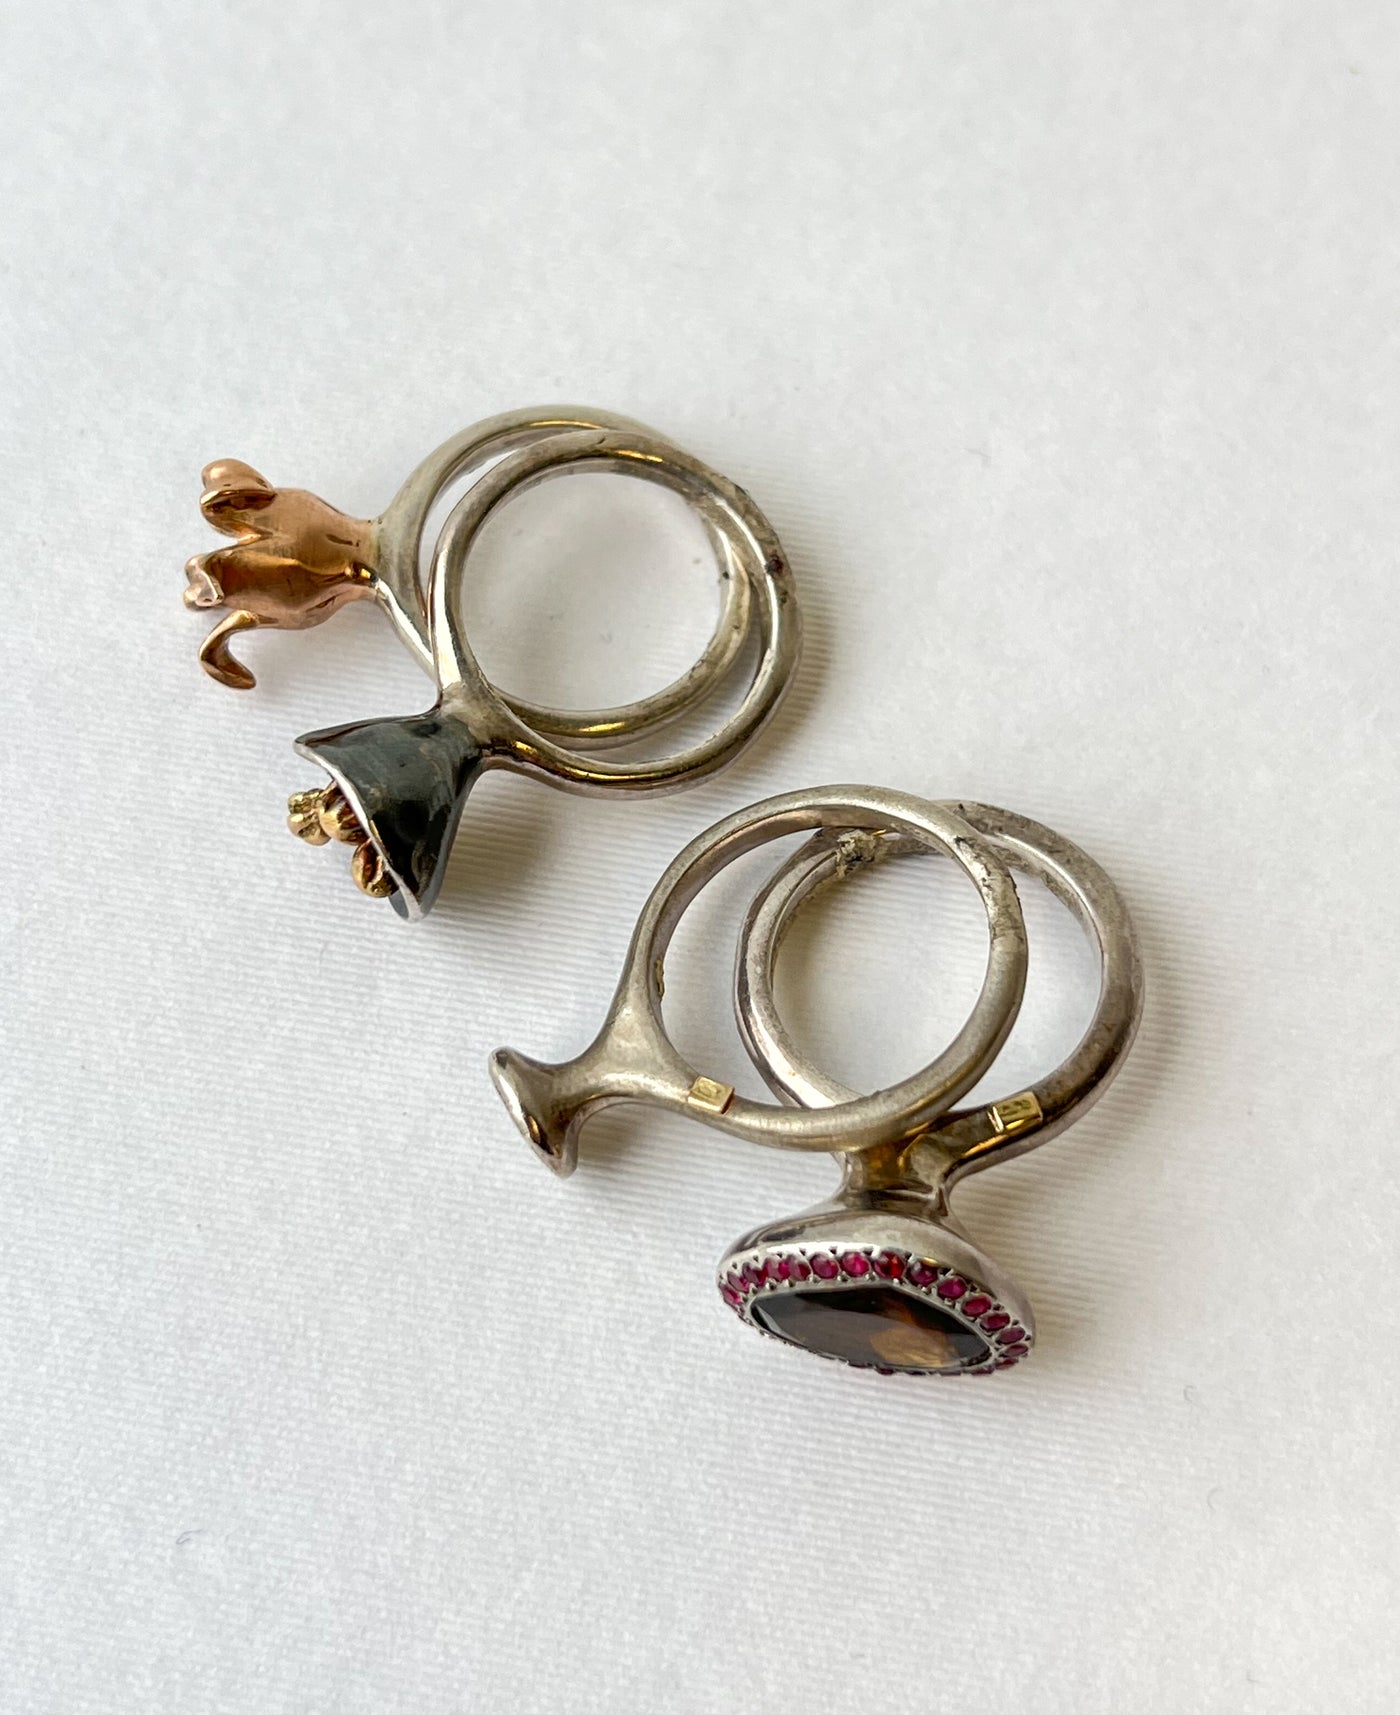 Rosa Maria Silver Ring with Small Dark Silver Pendant - Discounts on Rosa Maria at UAL